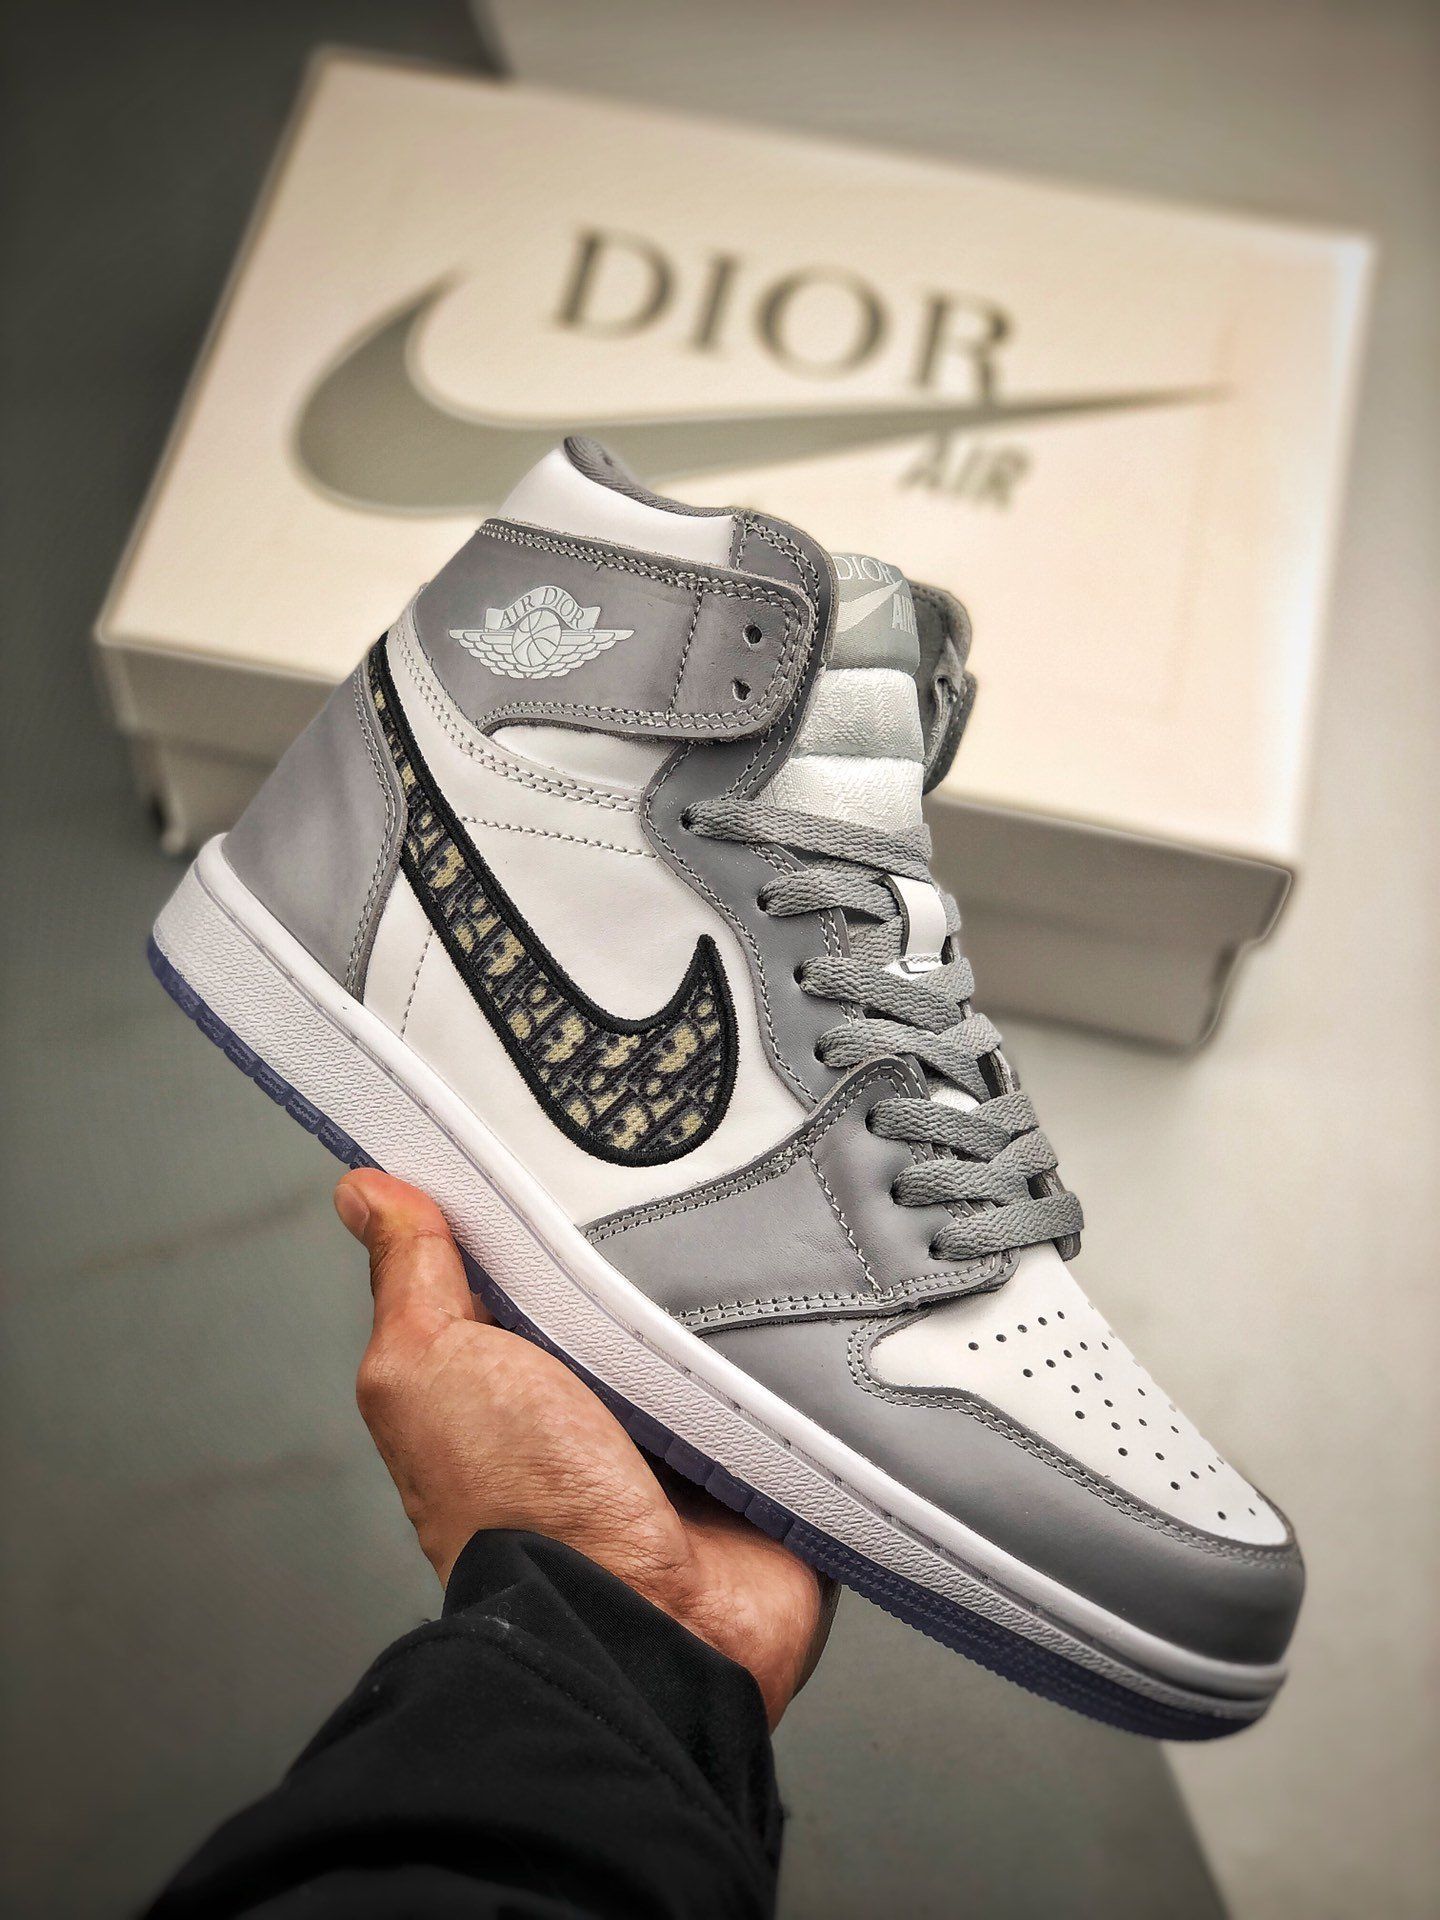 Dior Air Jordan 1 High Photos  Release Info  SneakerNewscom